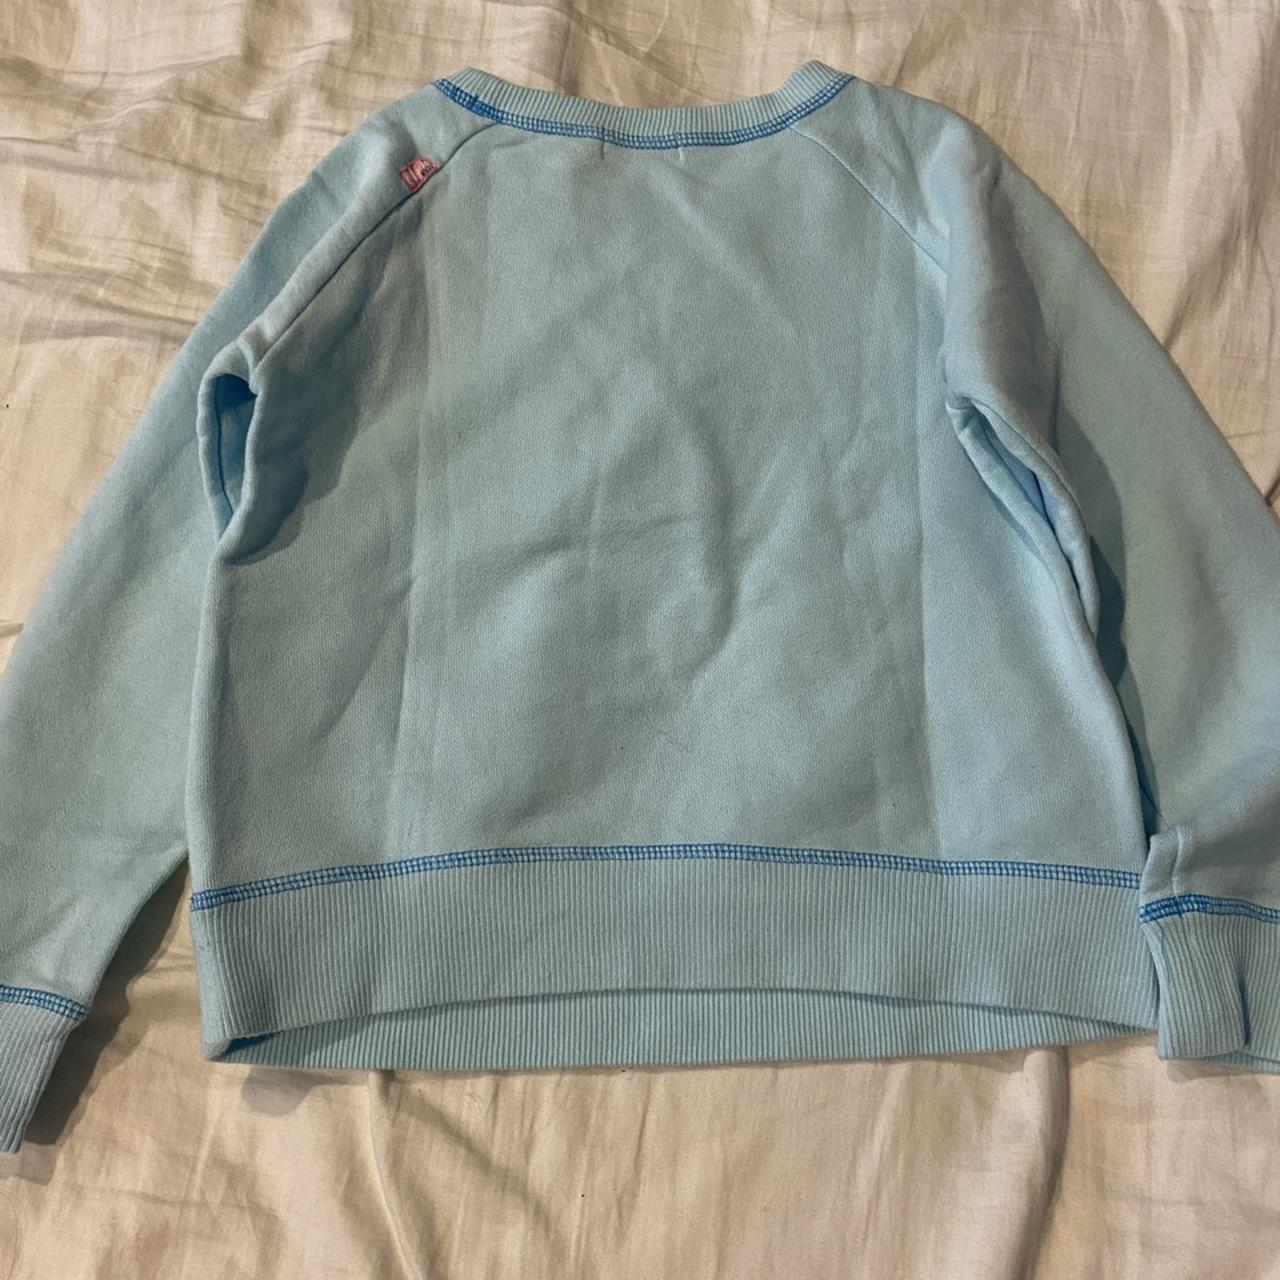 adorable rare angel blue sweater 😁 cute patchwork... - Depop